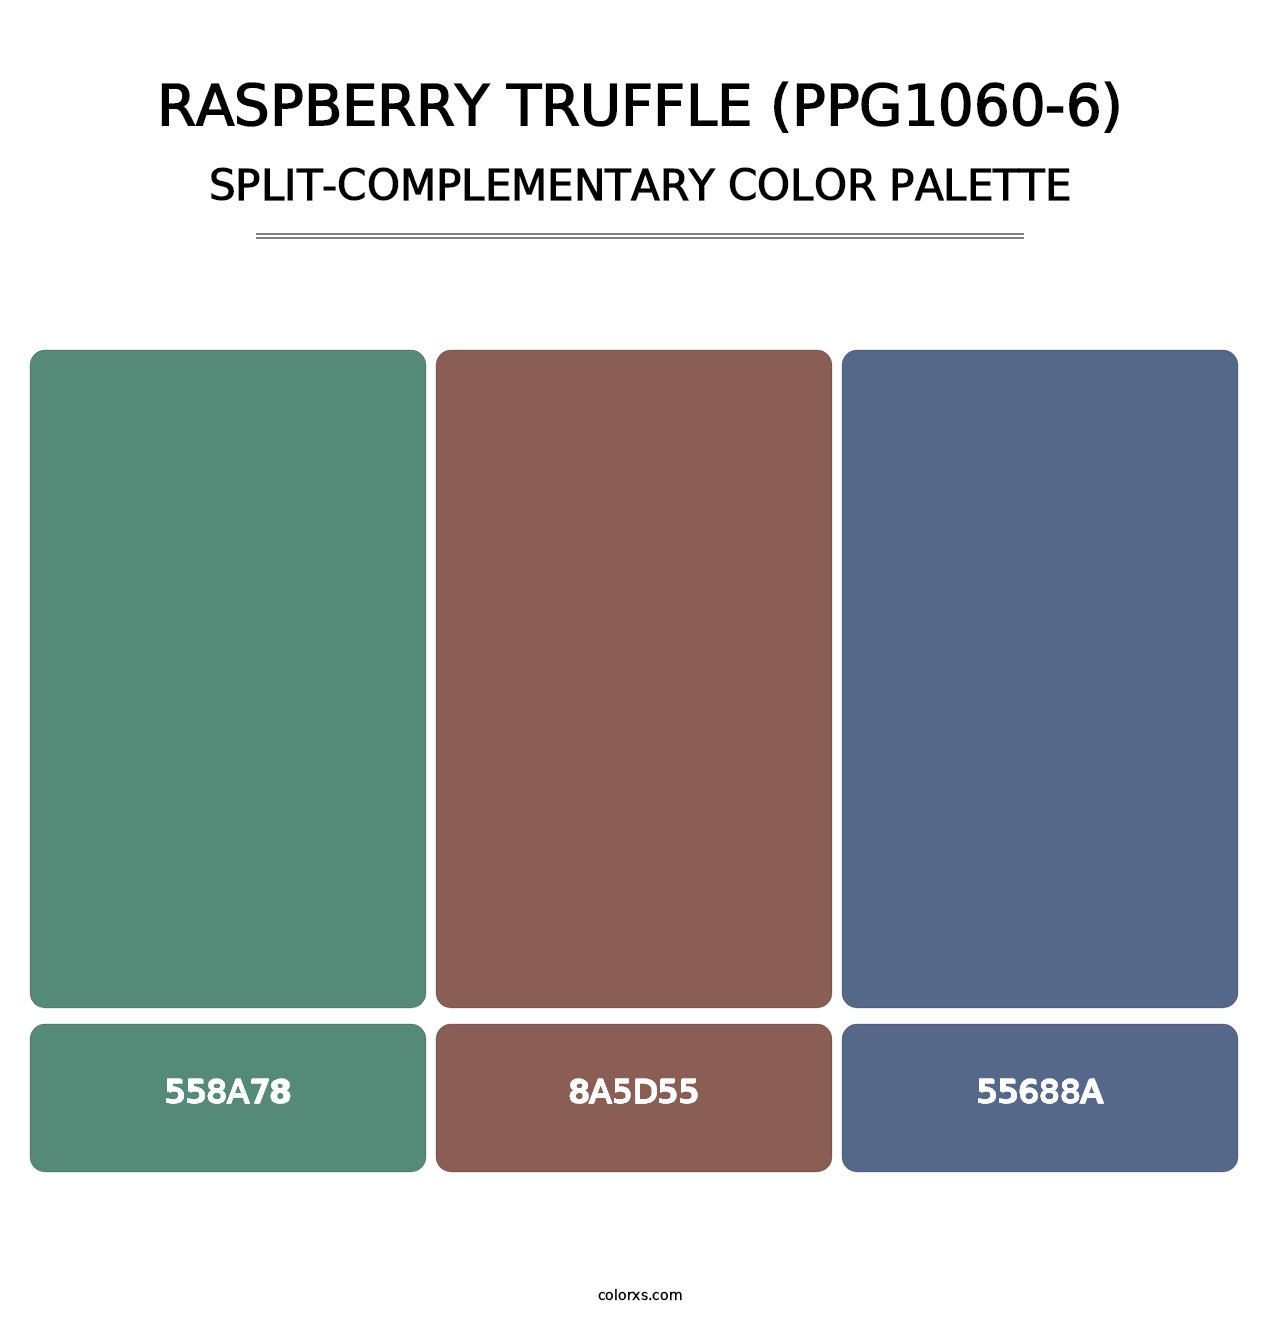 Raspberry Truffle (PPG1060-6) - Split-Complementary Color Palette